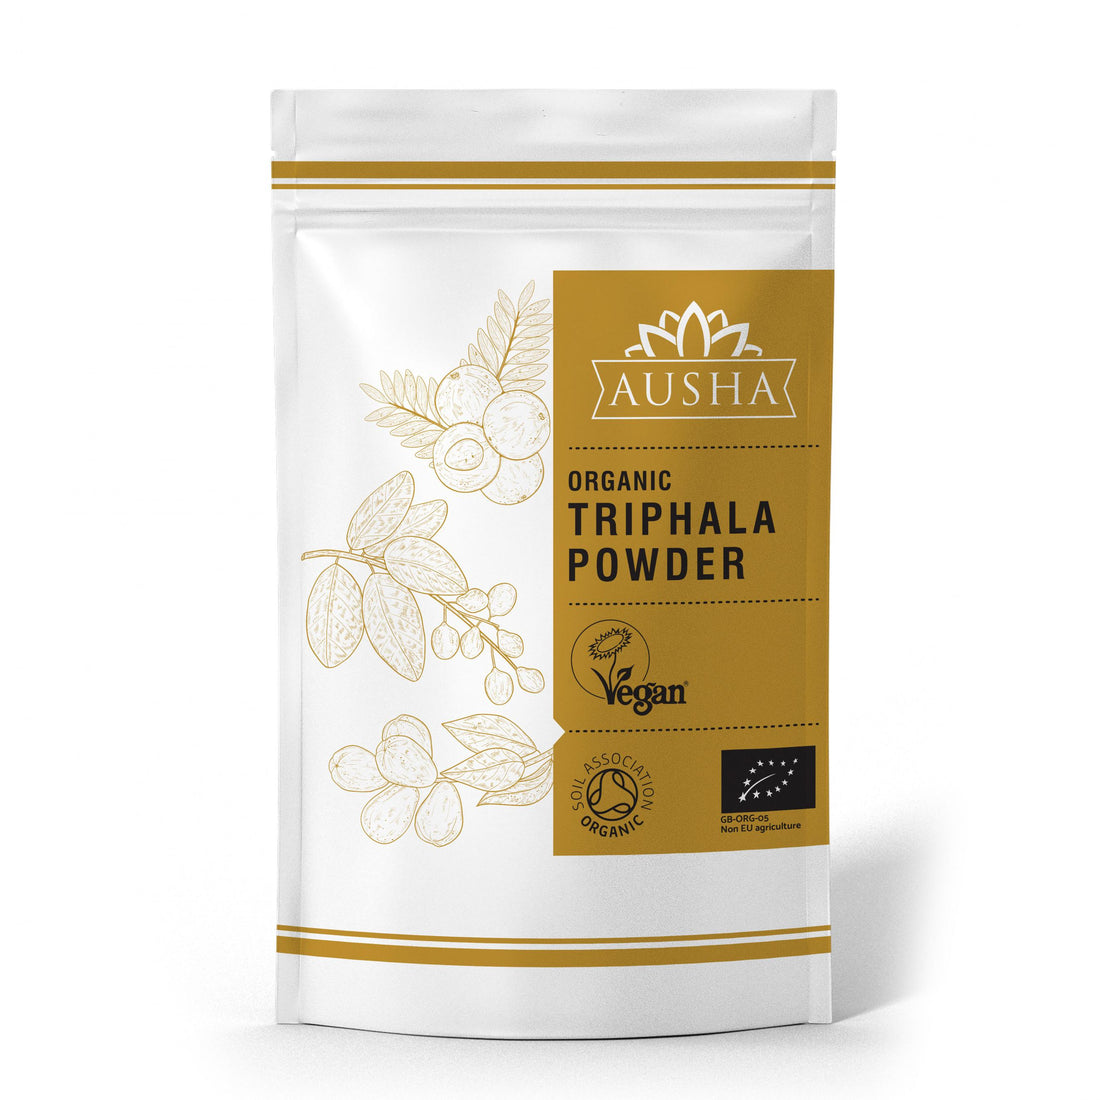 Ausha Organic Triphala Powder